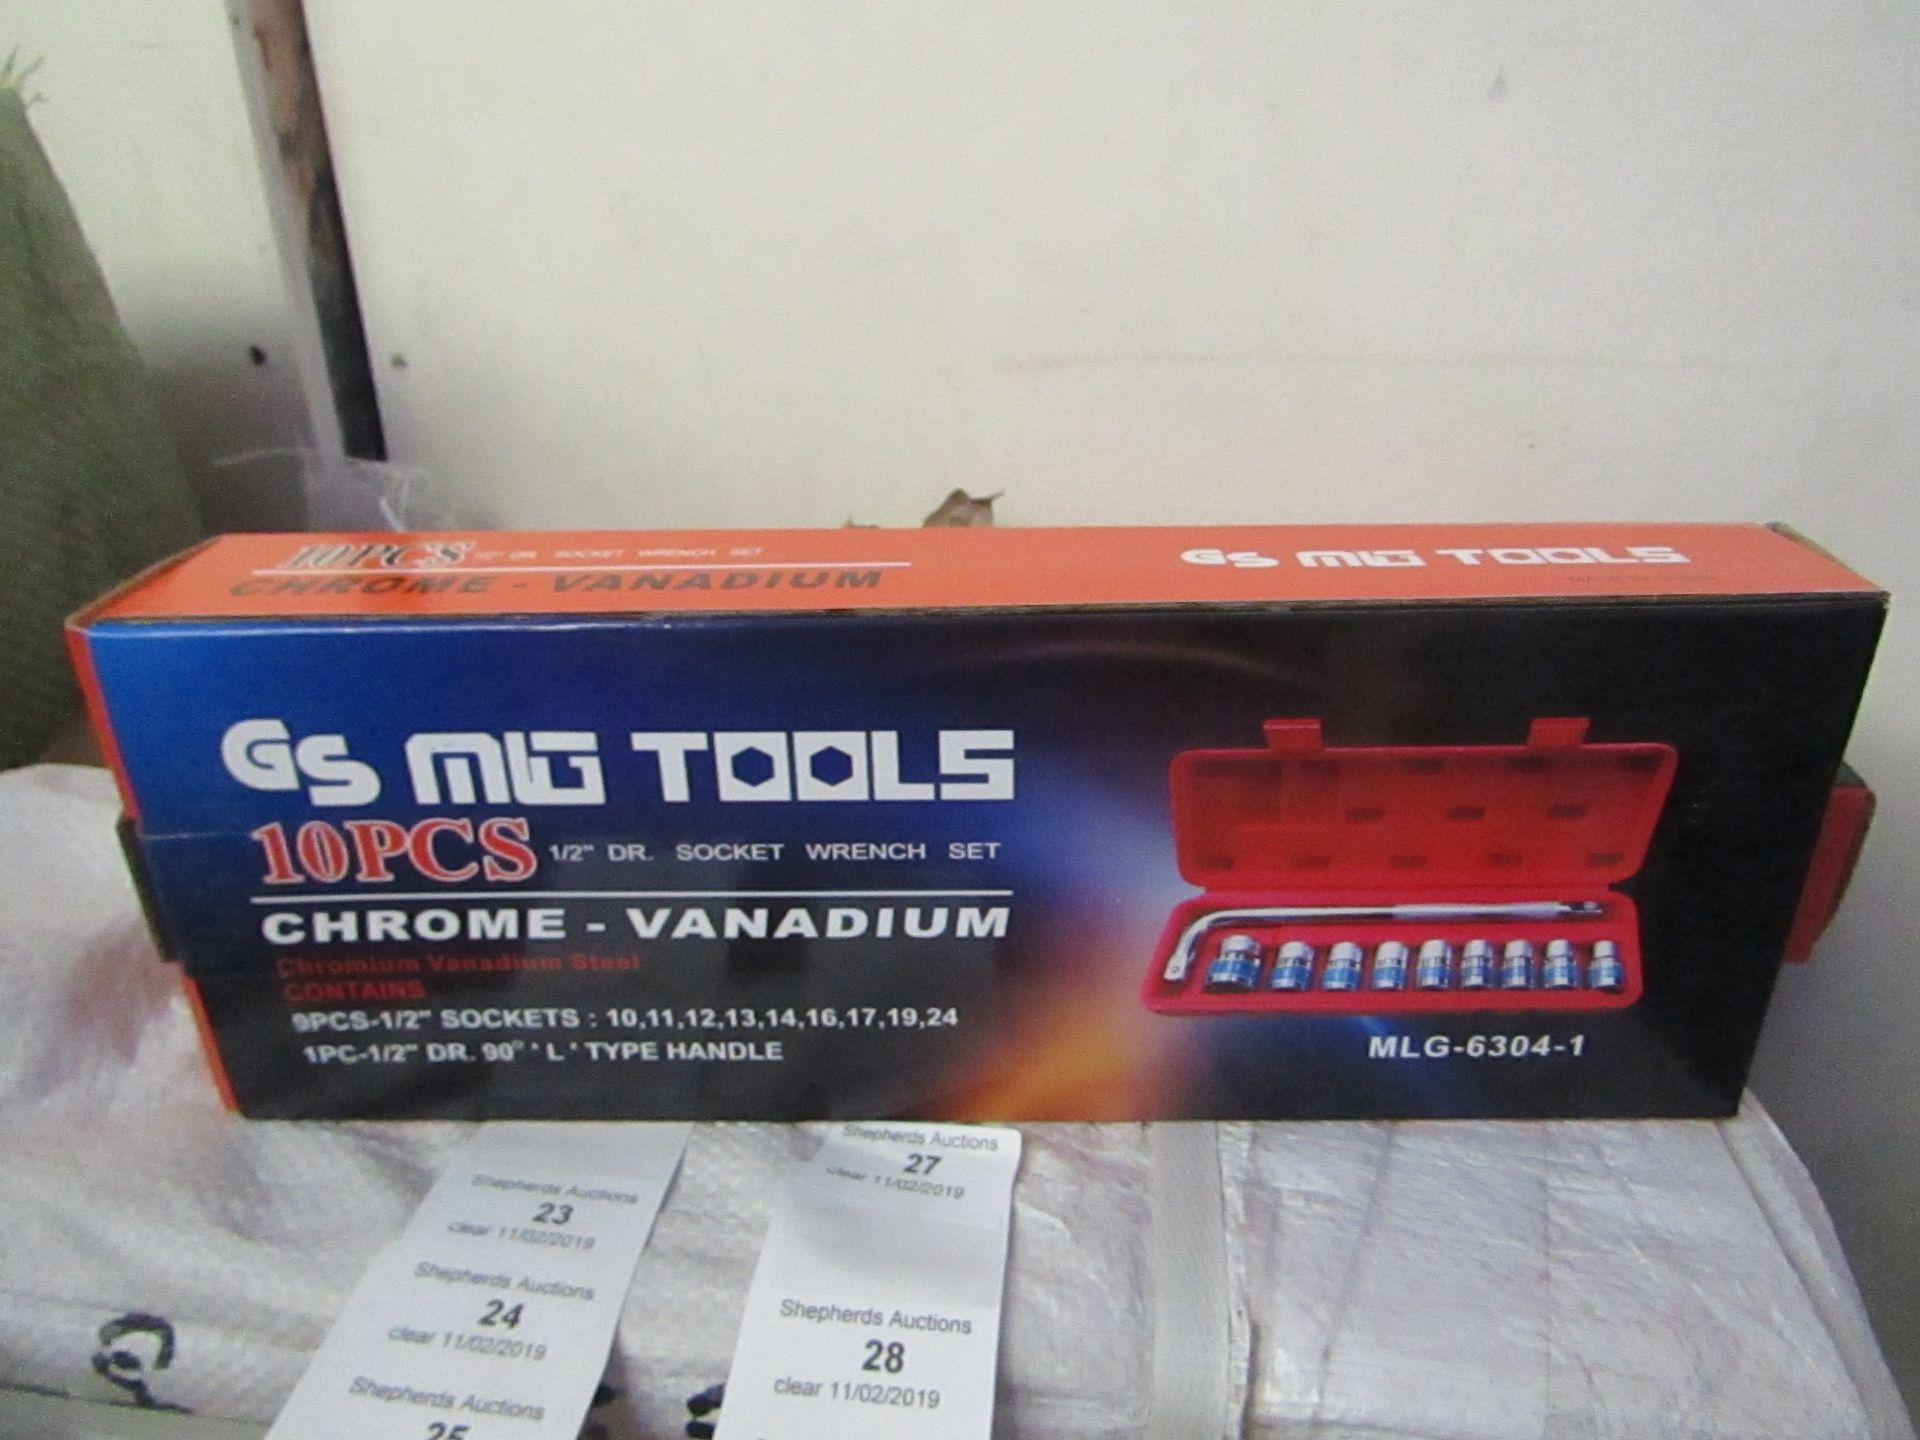 10 piece Chrome Vanadium Socket wrench set, new